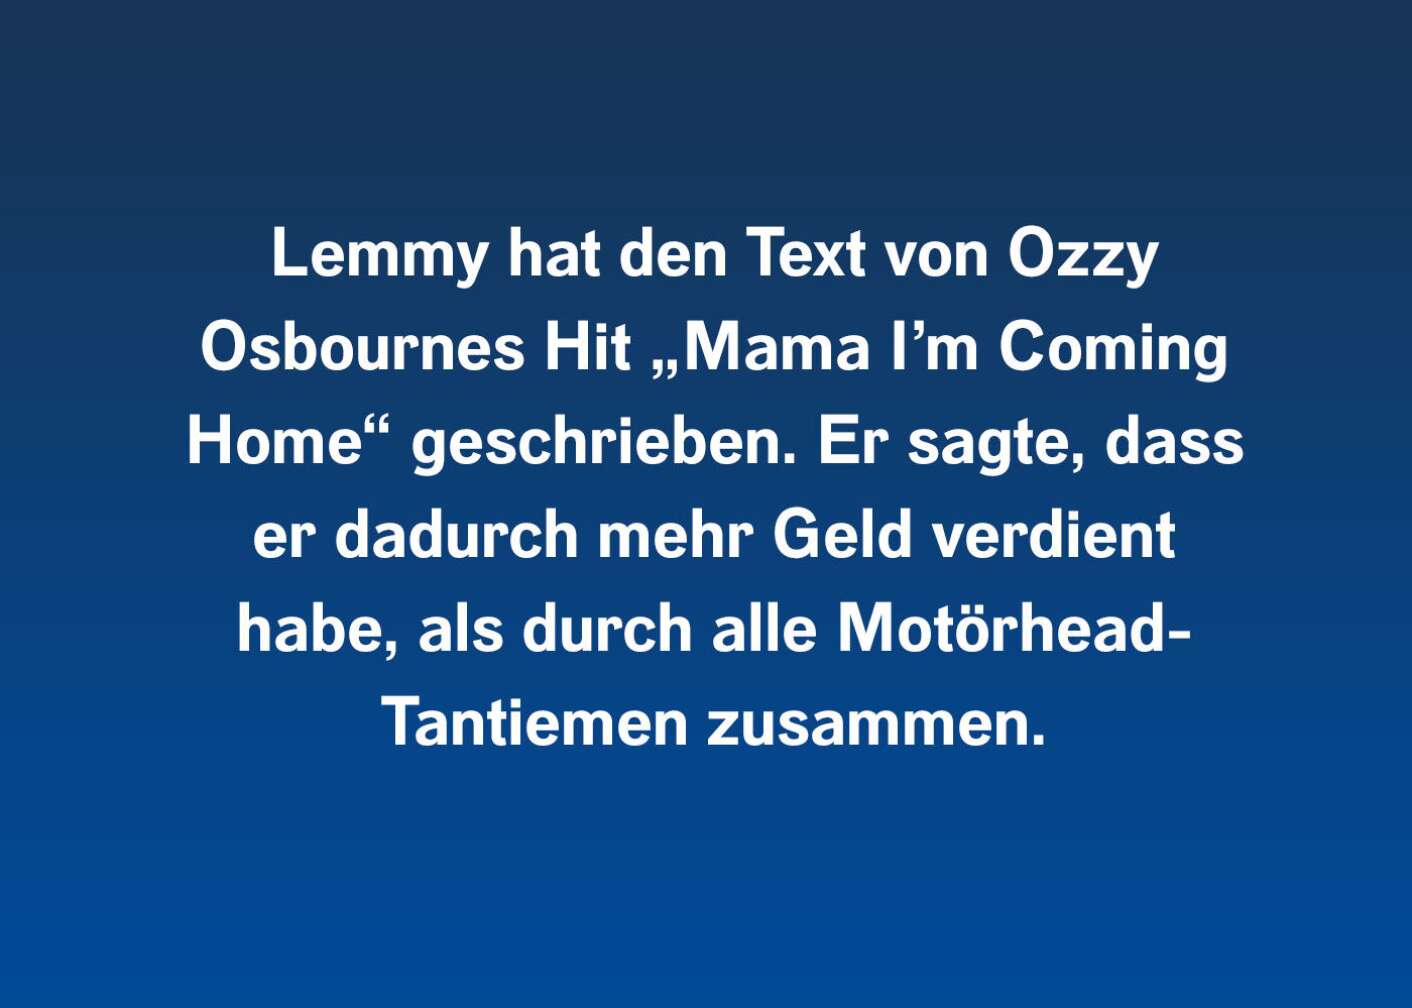 10 Fakten über Lemmy